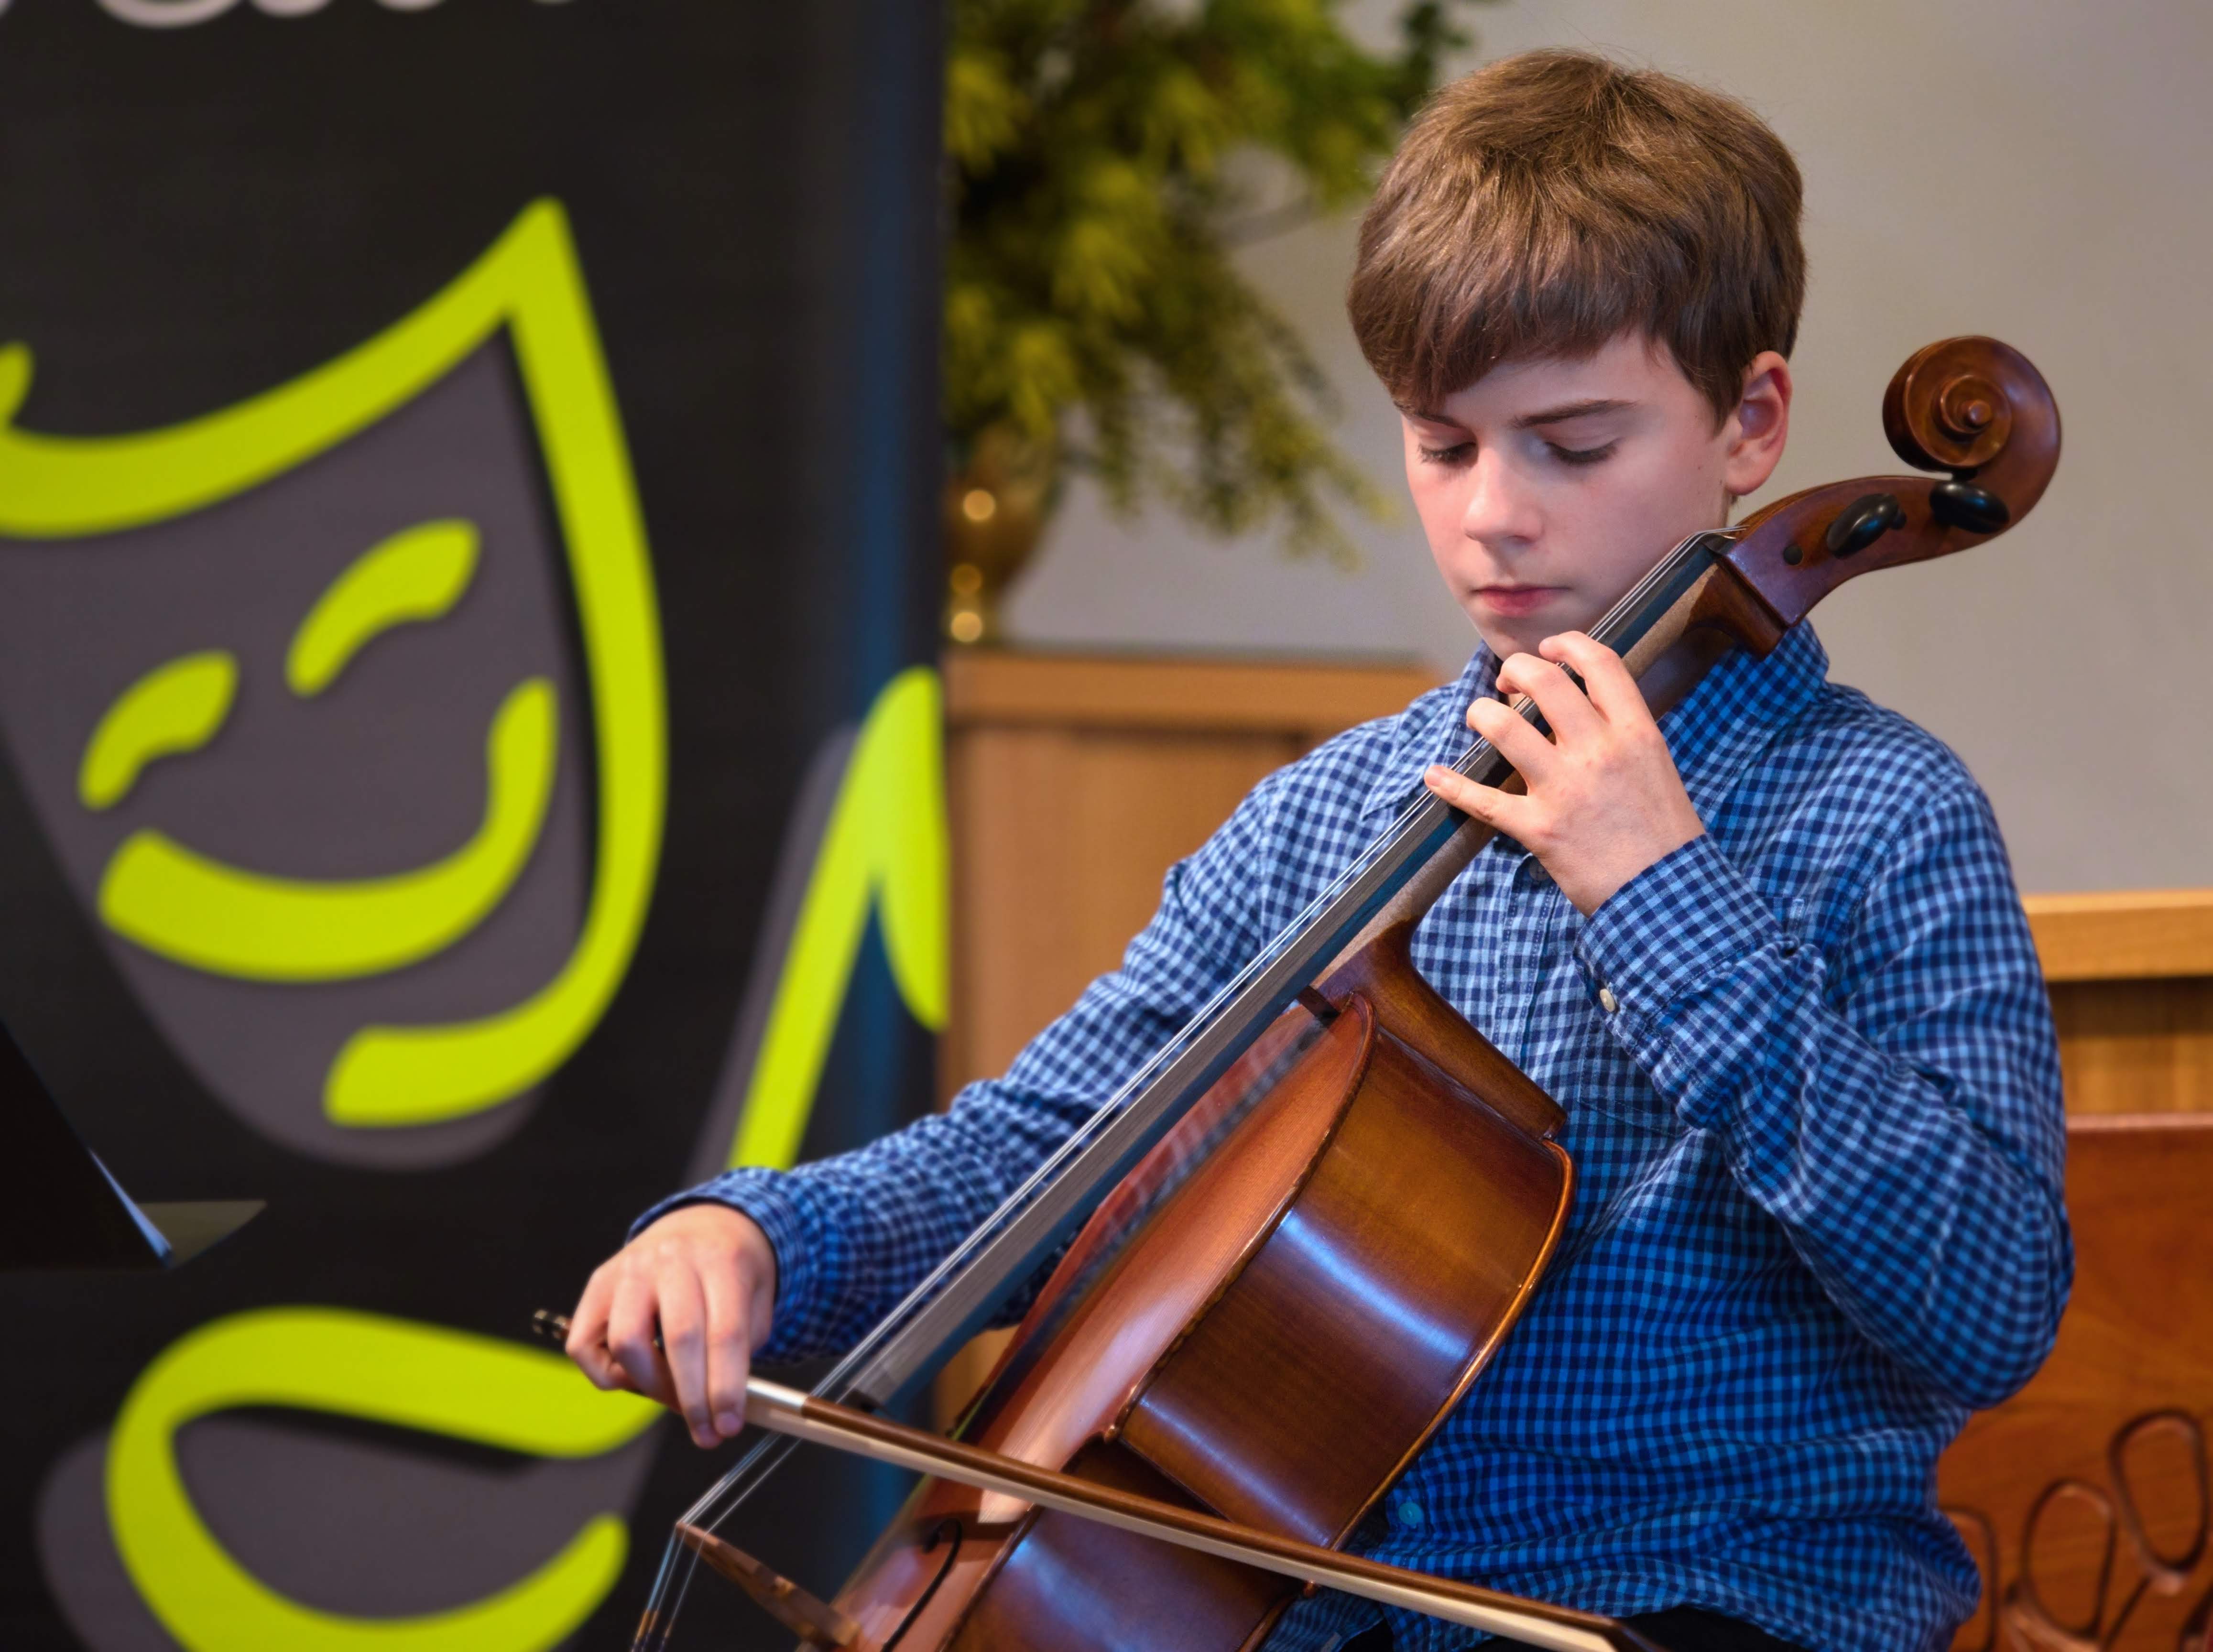 WGE Instrumental Mac O'Connor Displays His Skill on the Cello